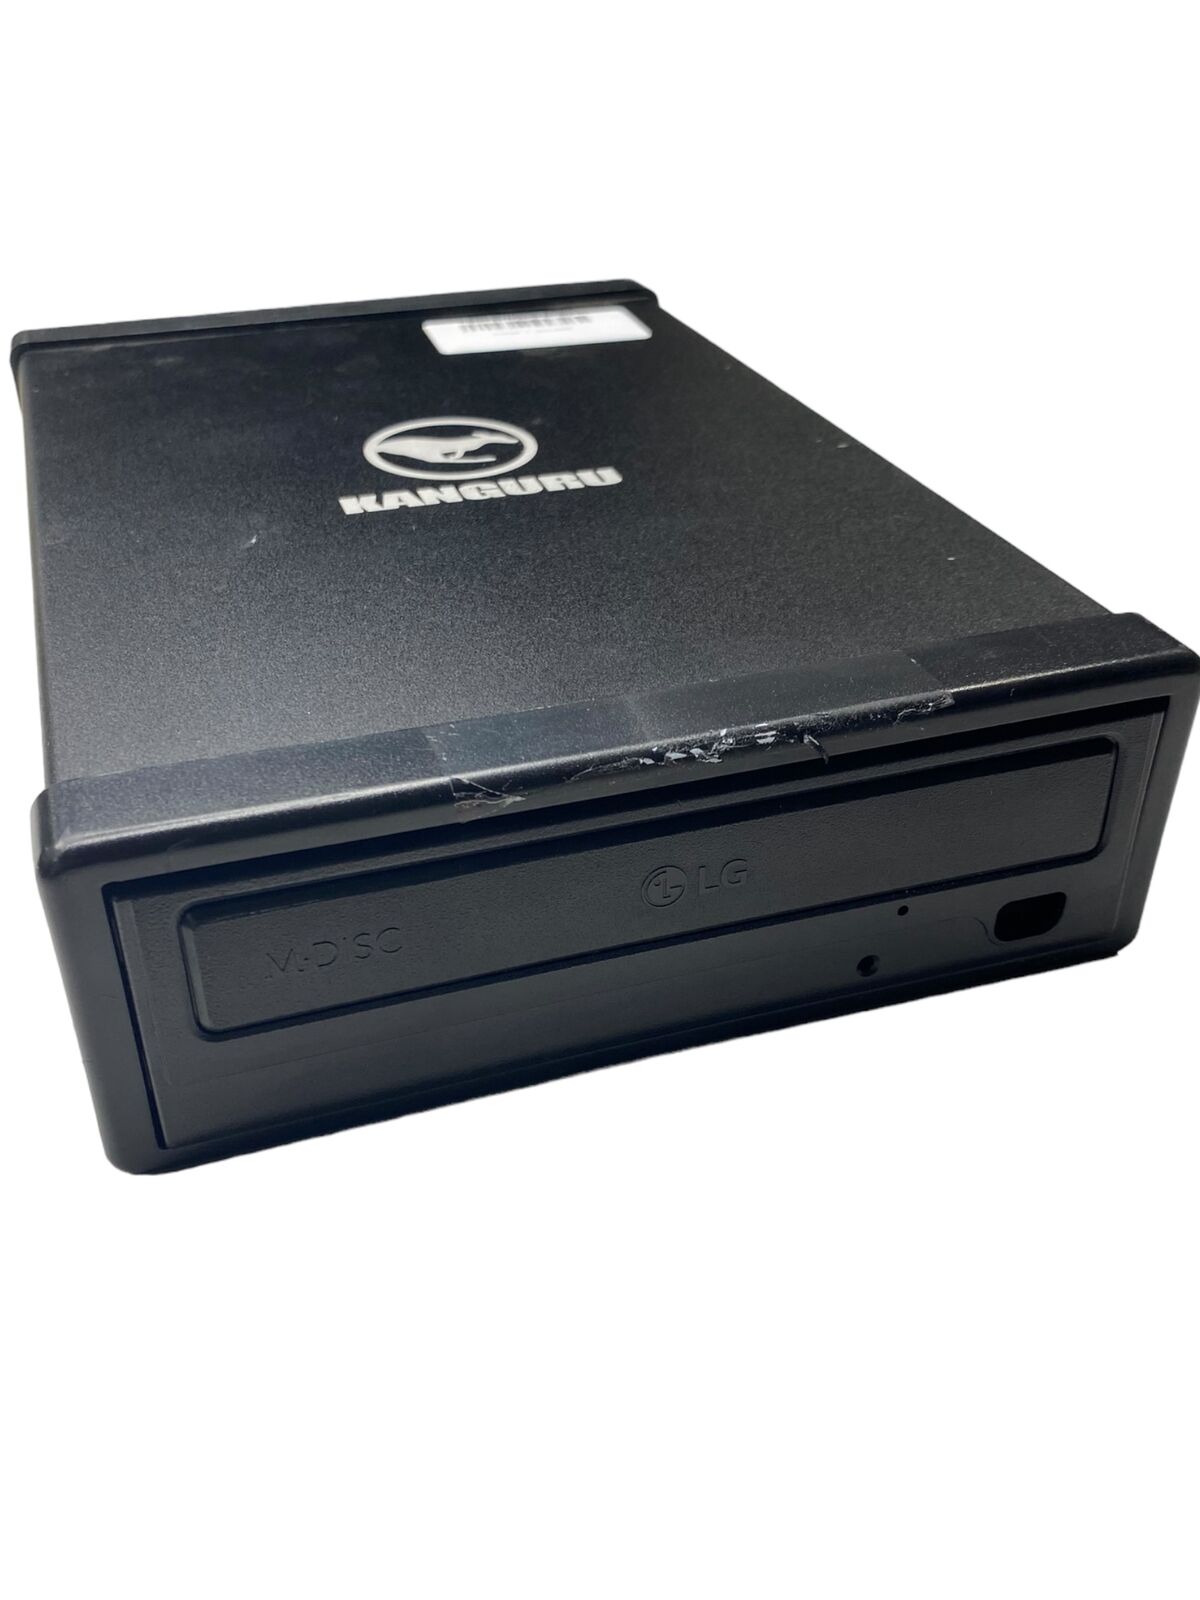 LG Internal DVD Rewriter | Super Multi with M-DISC Support SATA